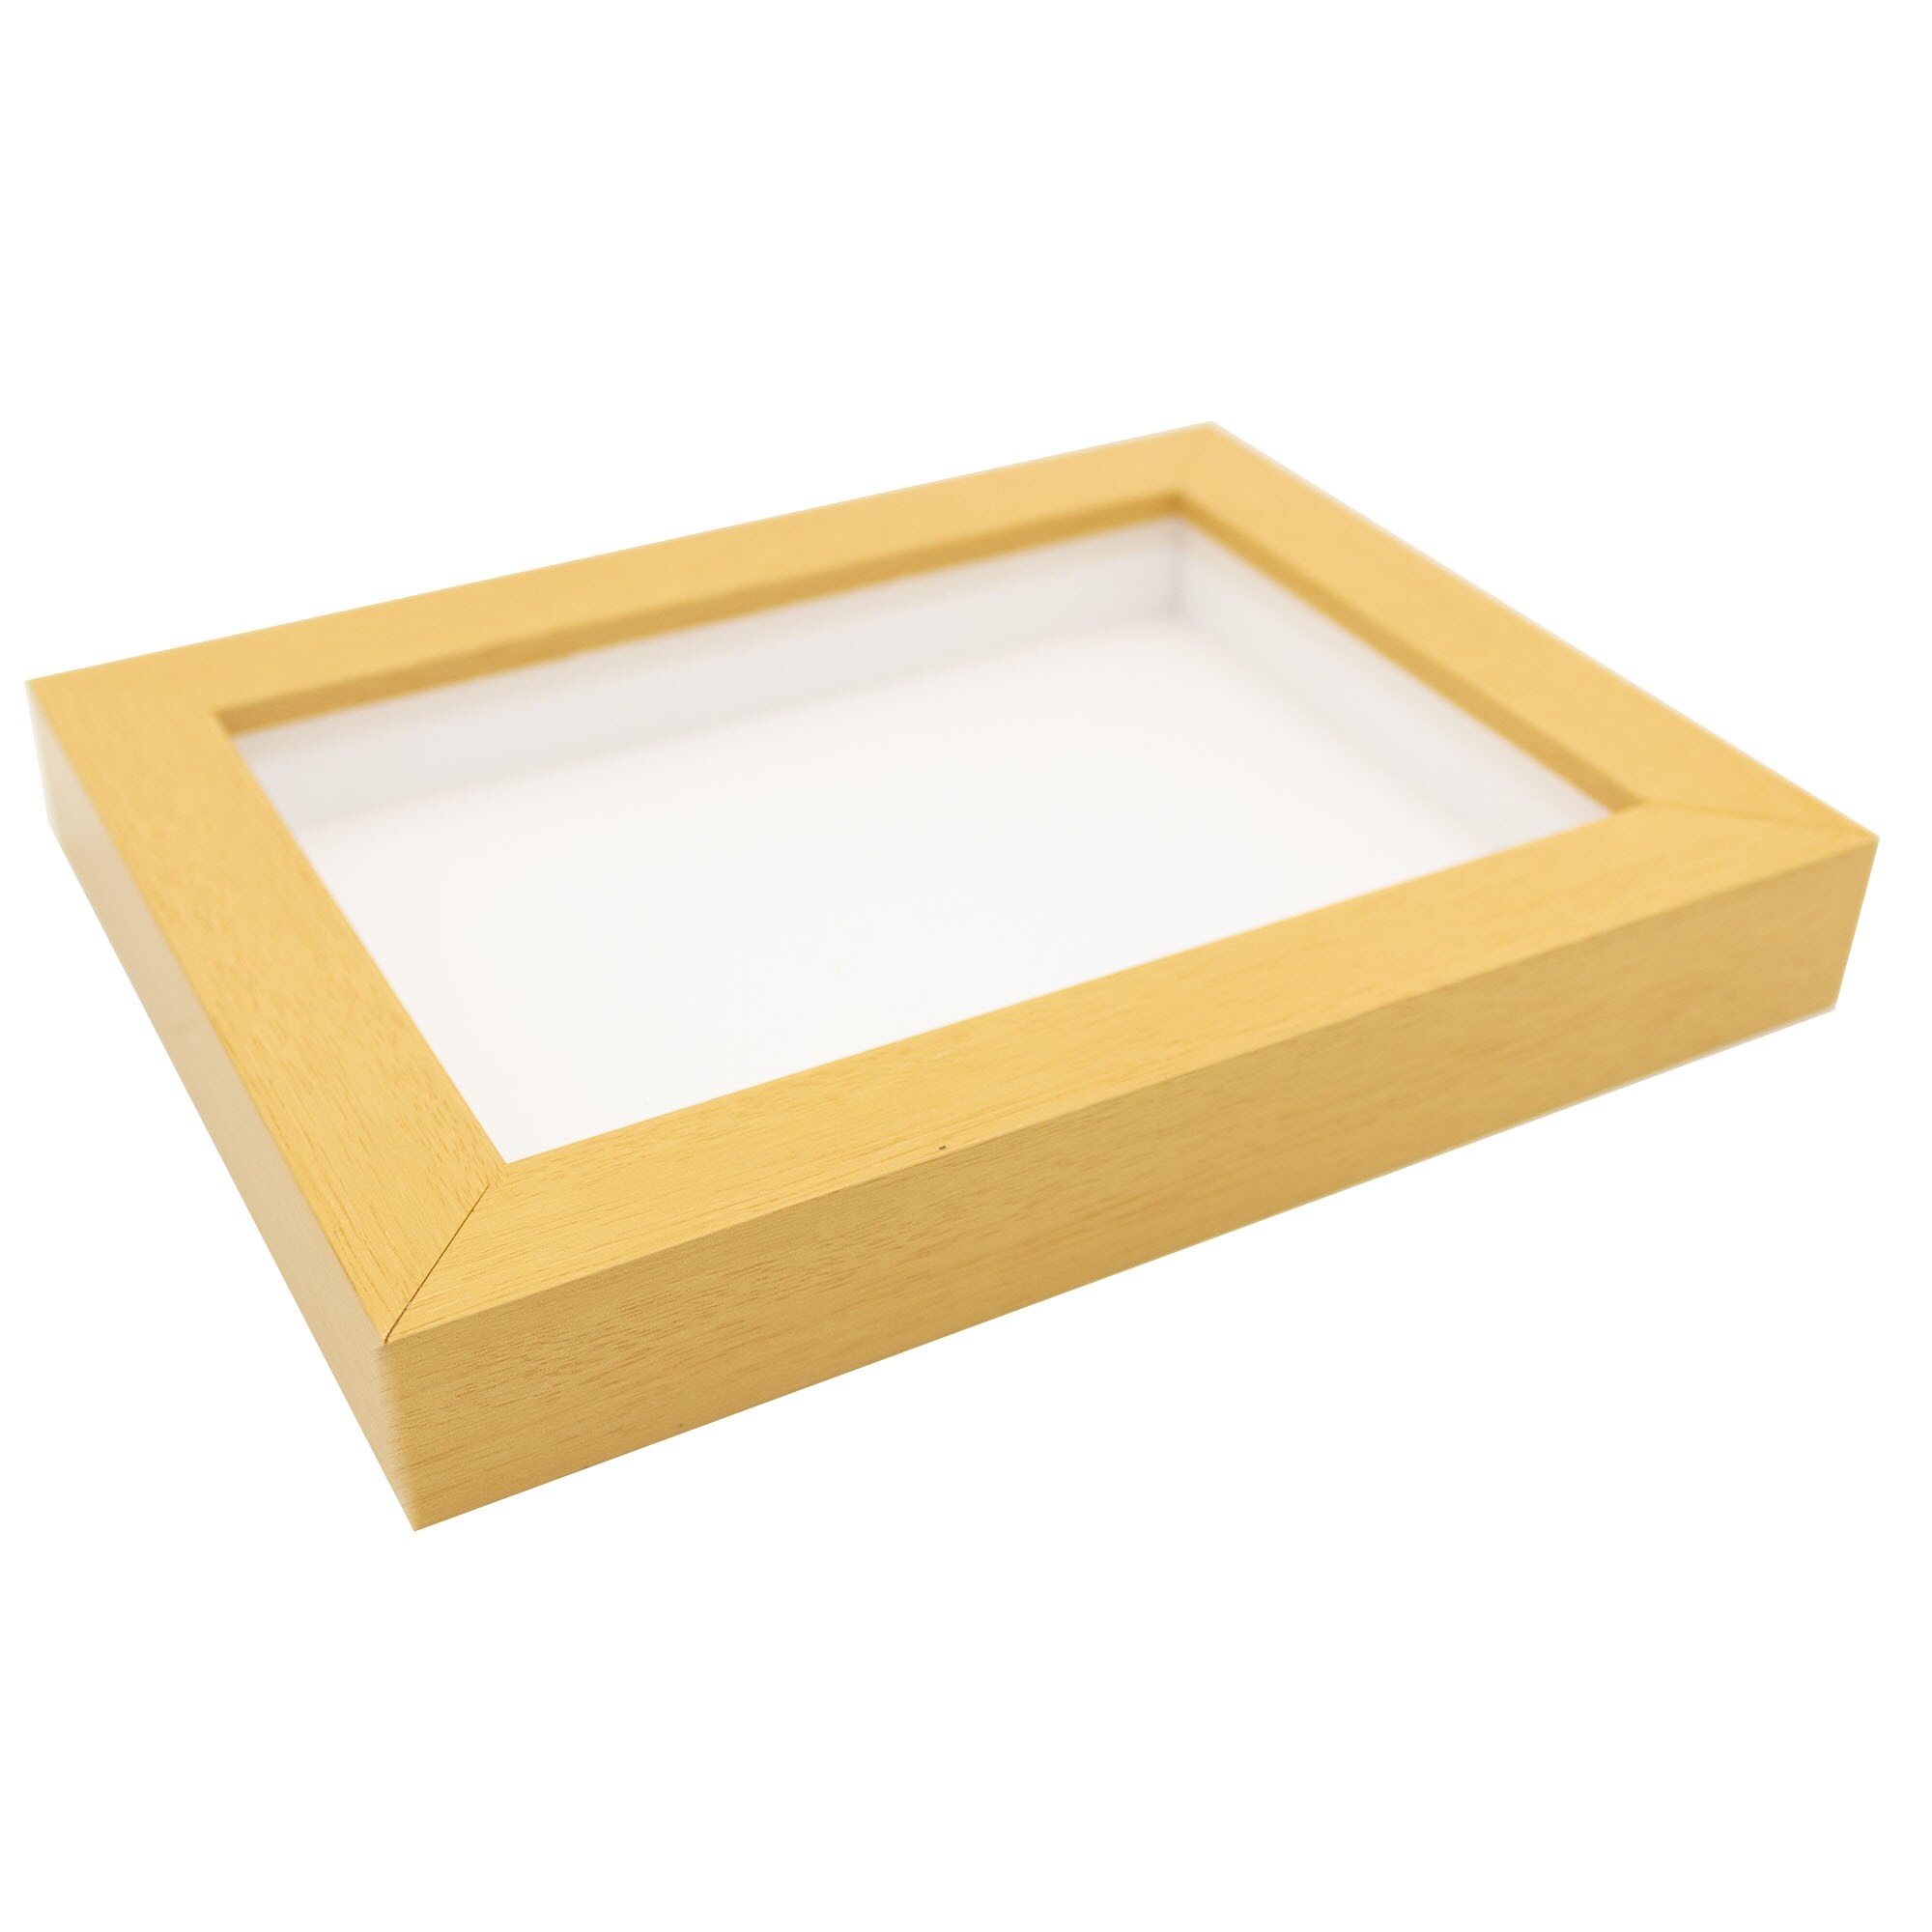 Natural Wood Shadow Boxes, 8x8 Shadow Box Frame, Wooden Shadow Box